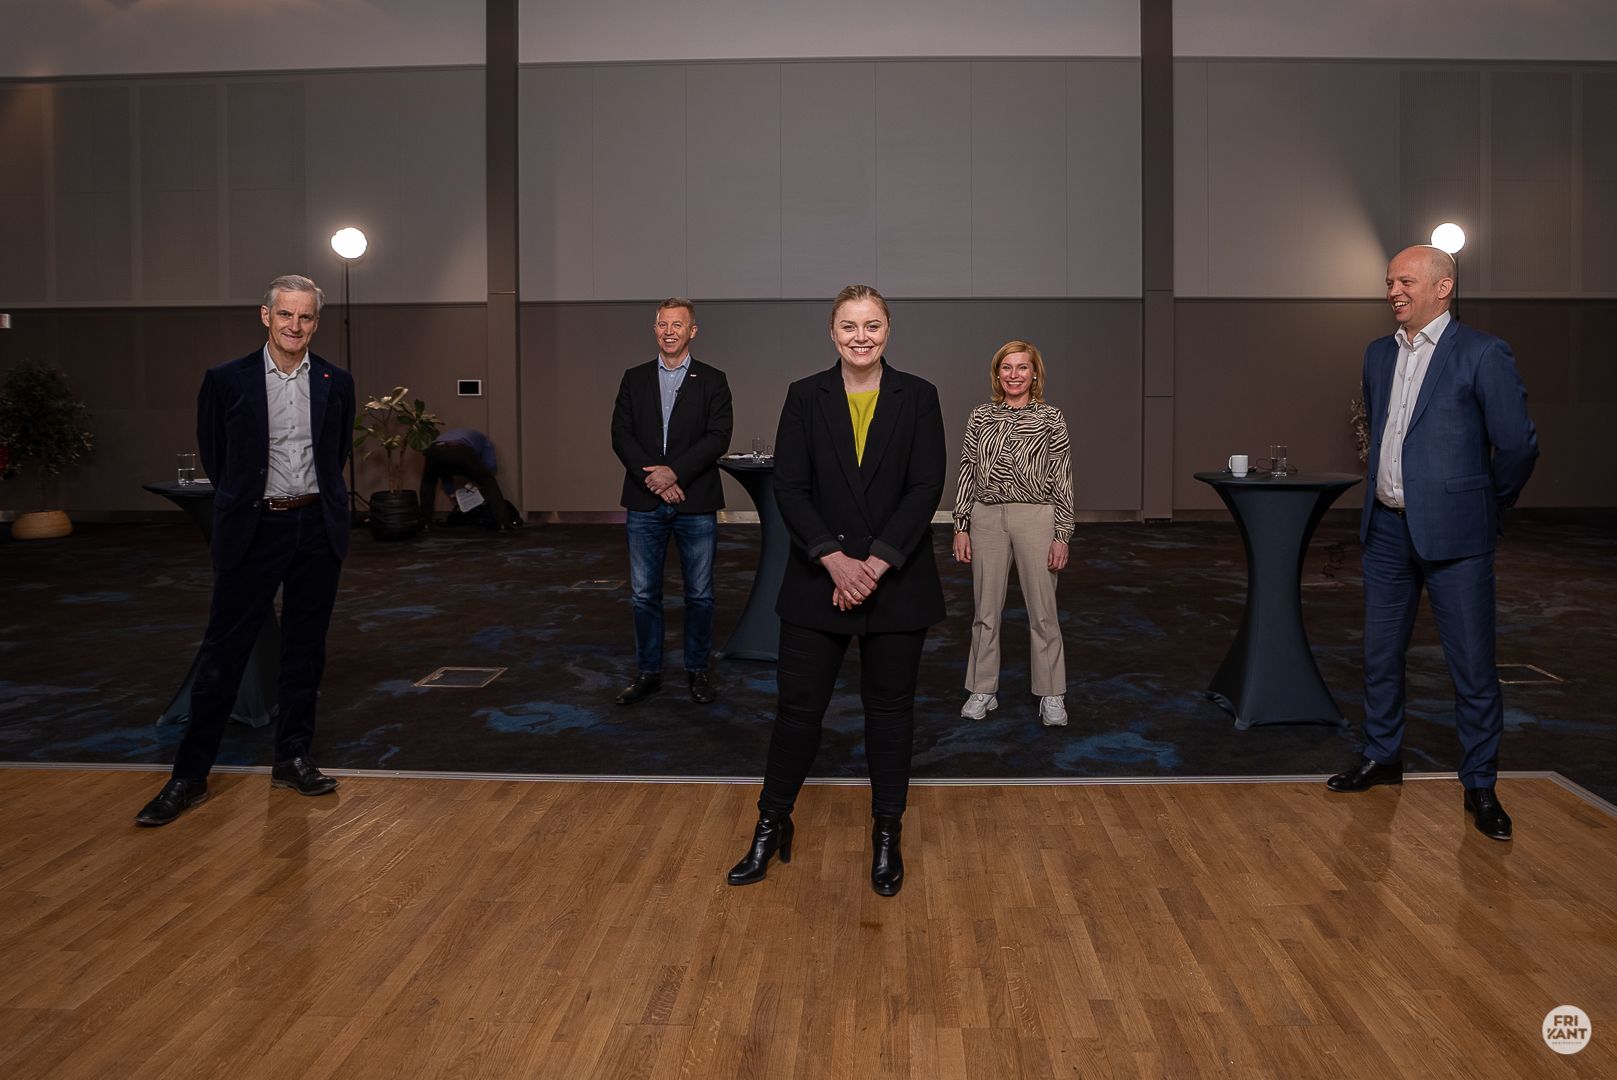 Jonas Gahr Støre, Frode Alfheim, Tina Bru og Trygve Slagsvold Vedum deltok i debatten. Foto: Frank Rune Isaksen, Frikant